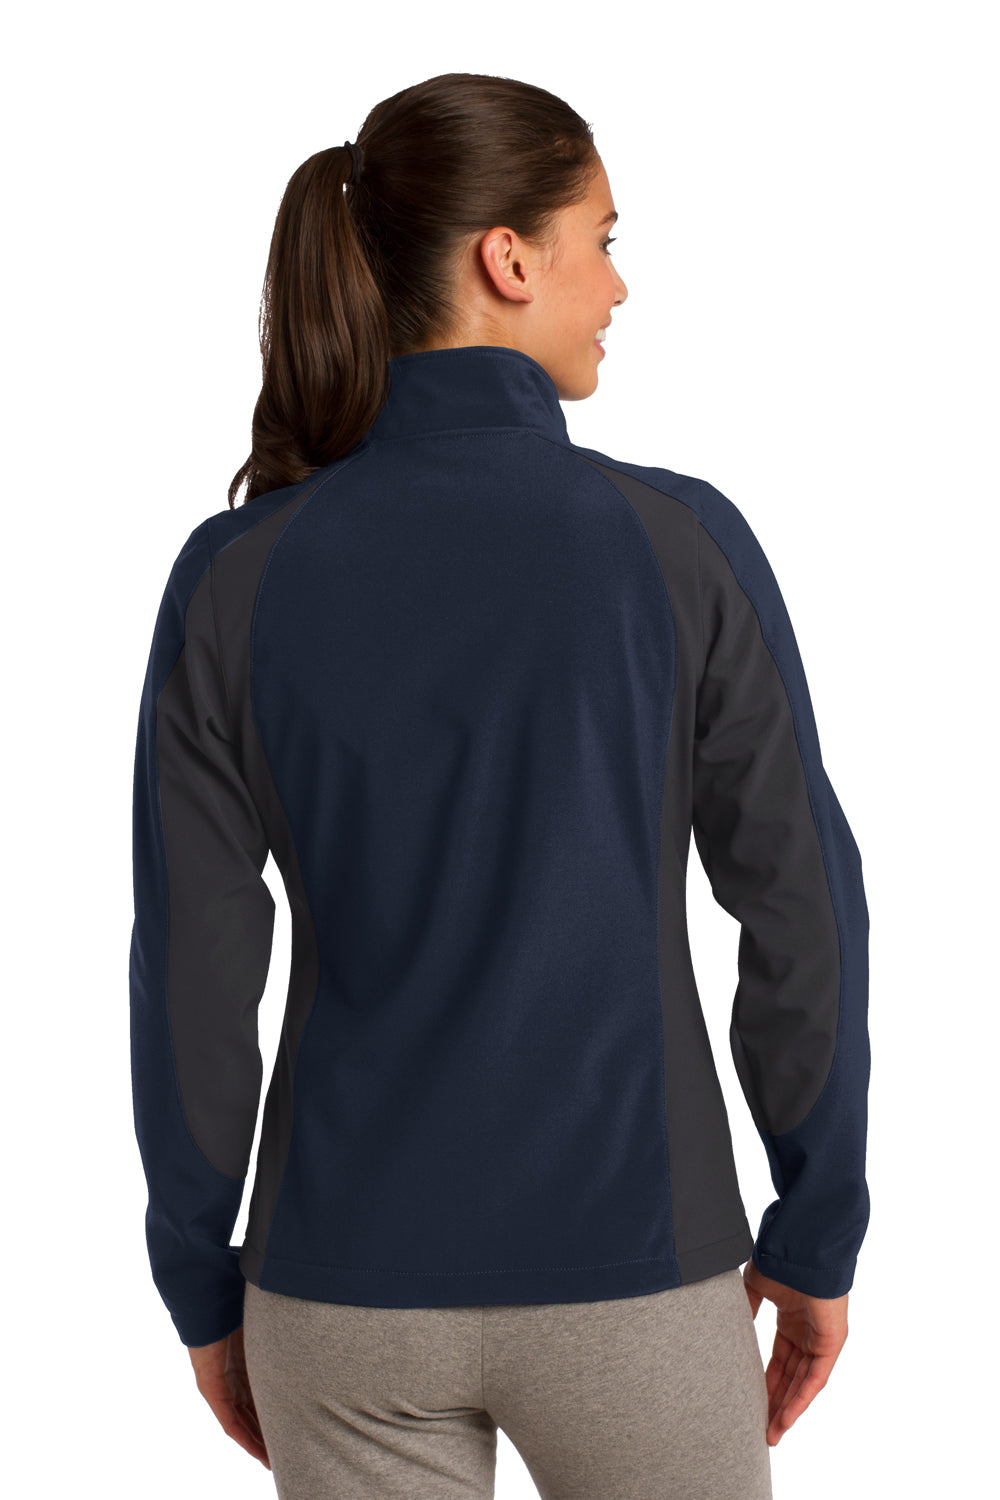 Sport-Tek LST970 Womens Water Resistant Full Zip Jacket Navy Blue/Grey Back